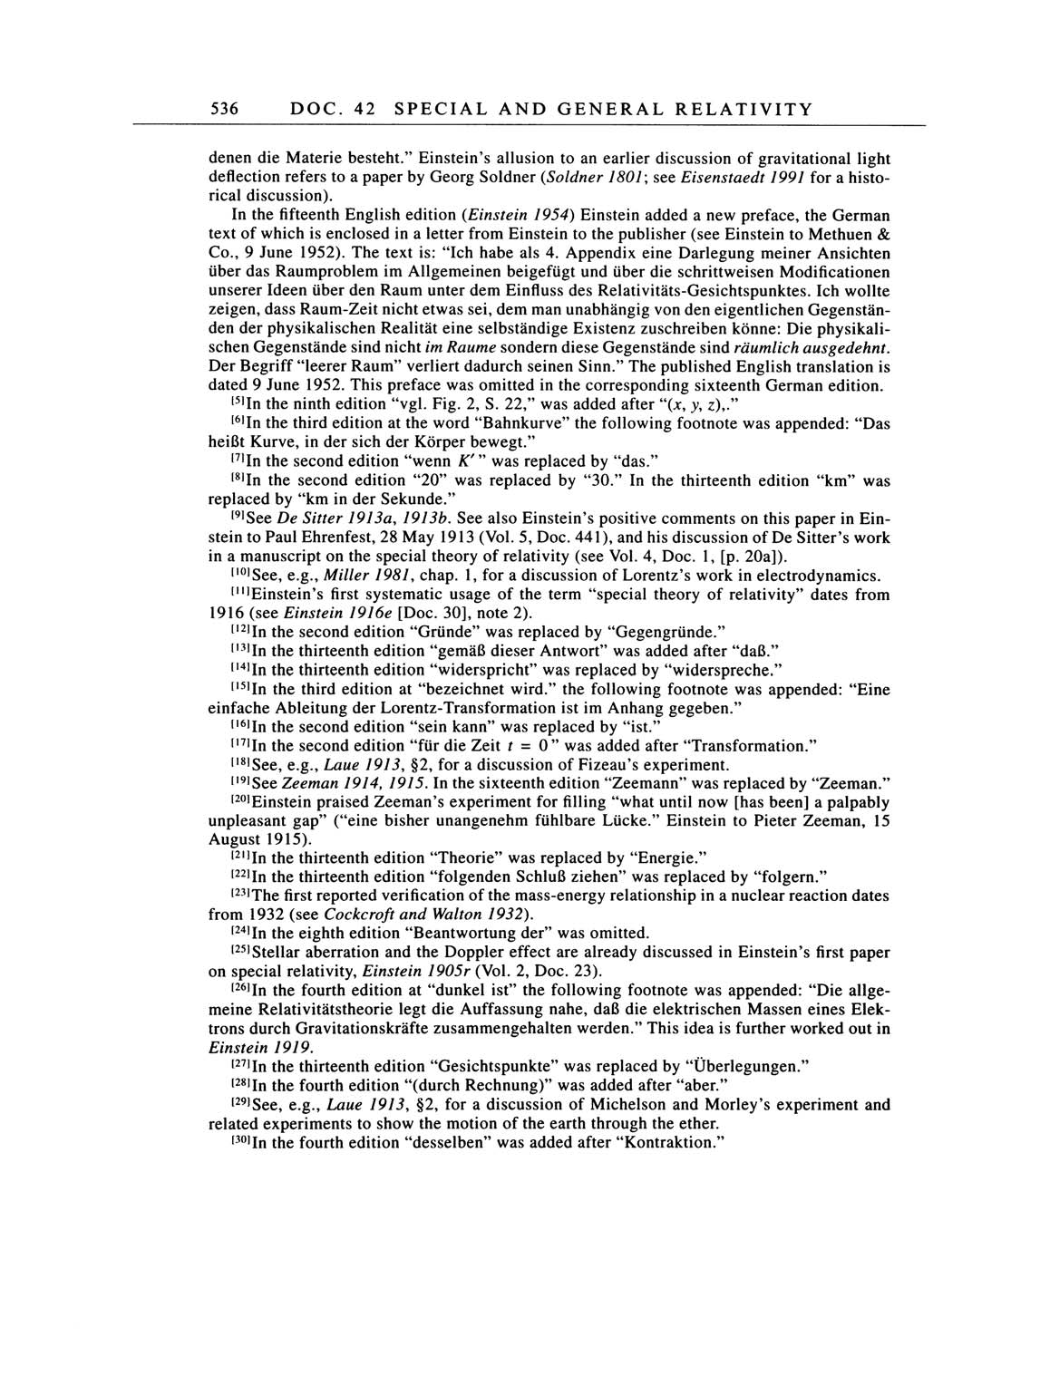 Volume 6: The Berlin Years: Writings, 1914-1917 page 536